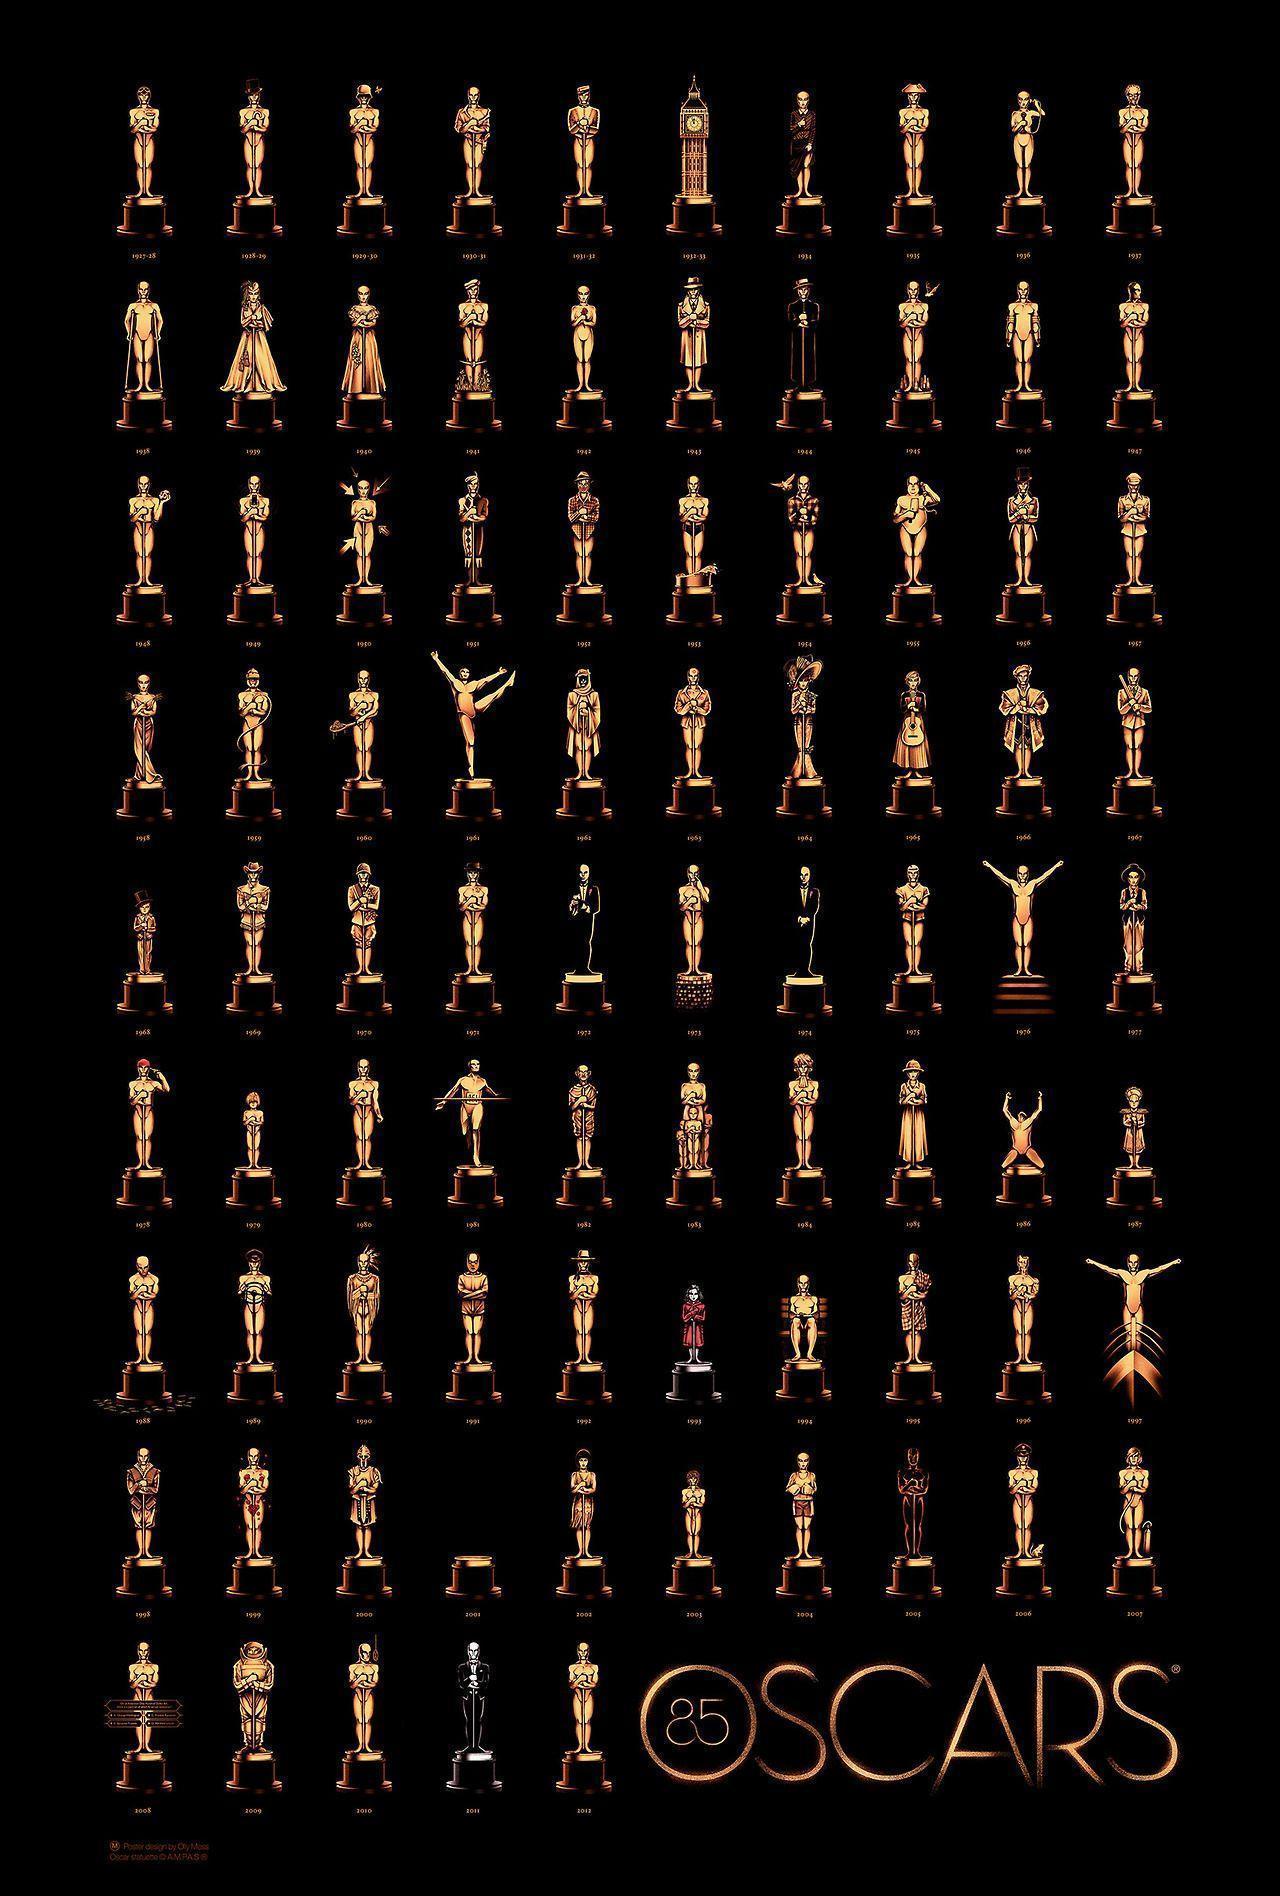 image about Oscars